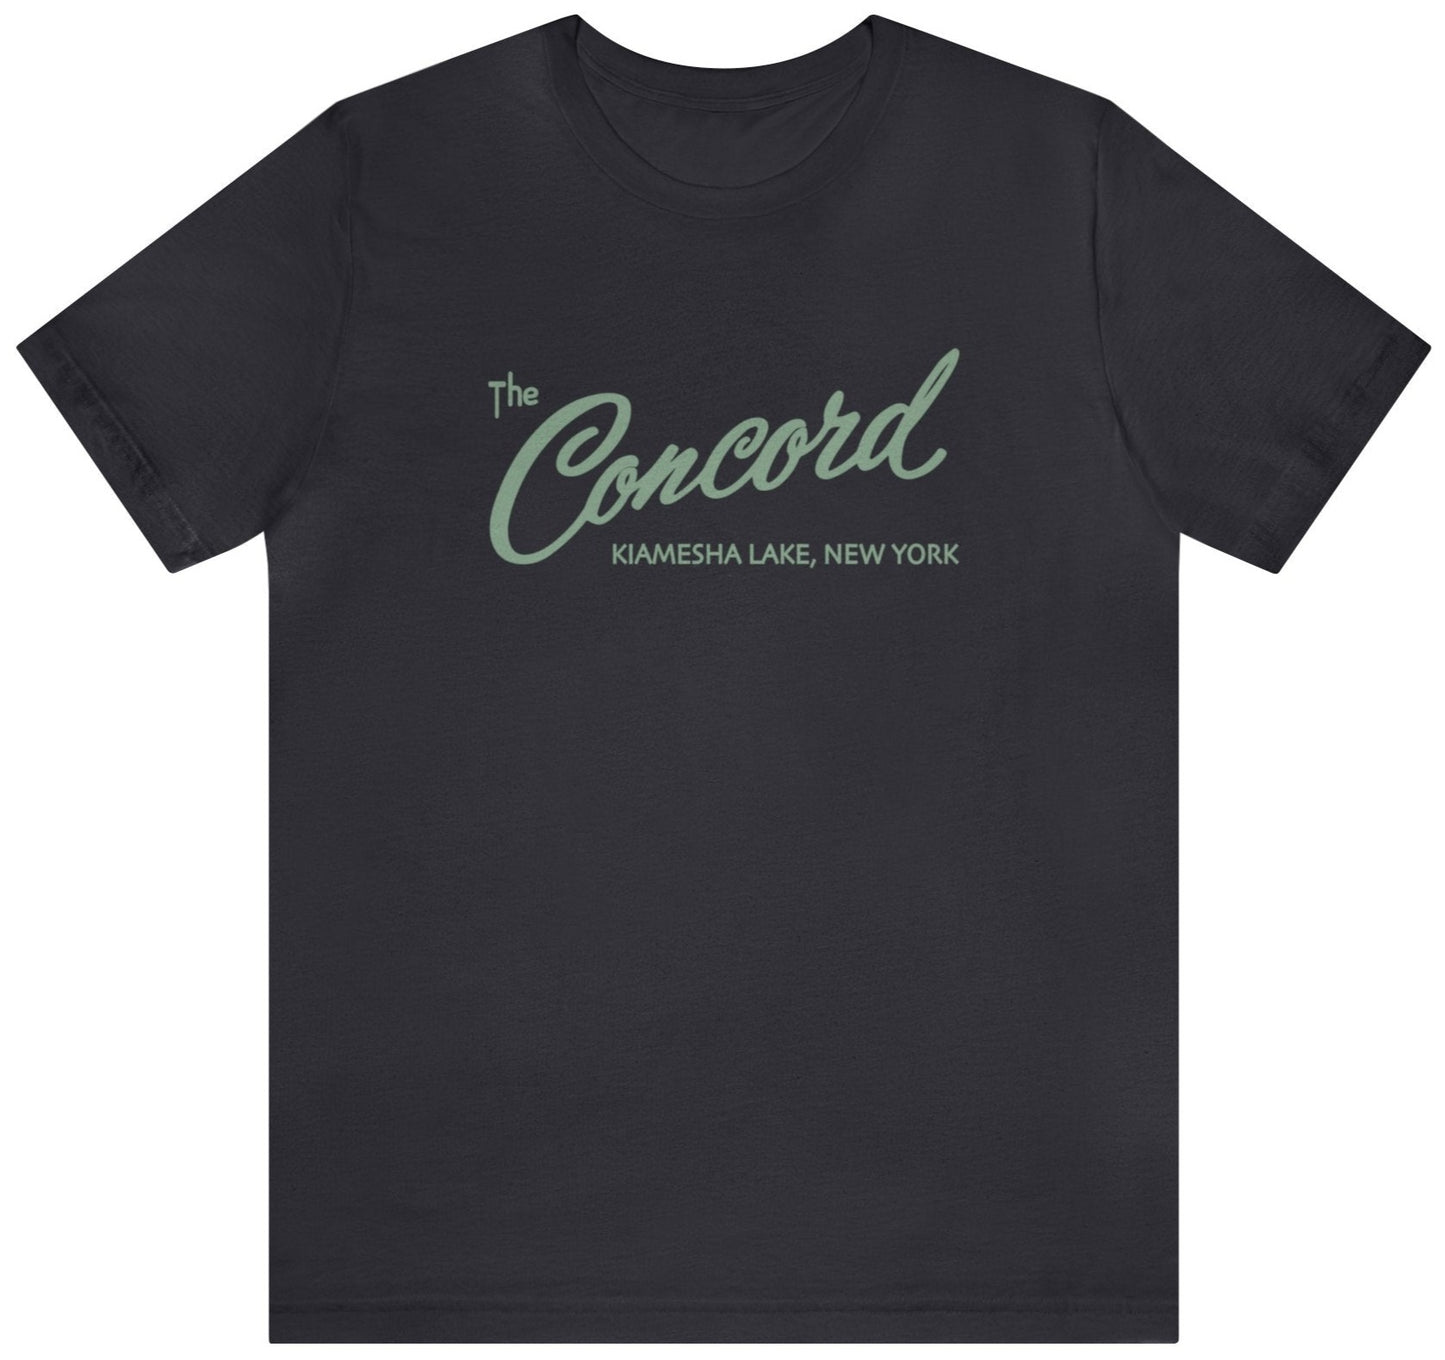 Concord Catskills t shirt